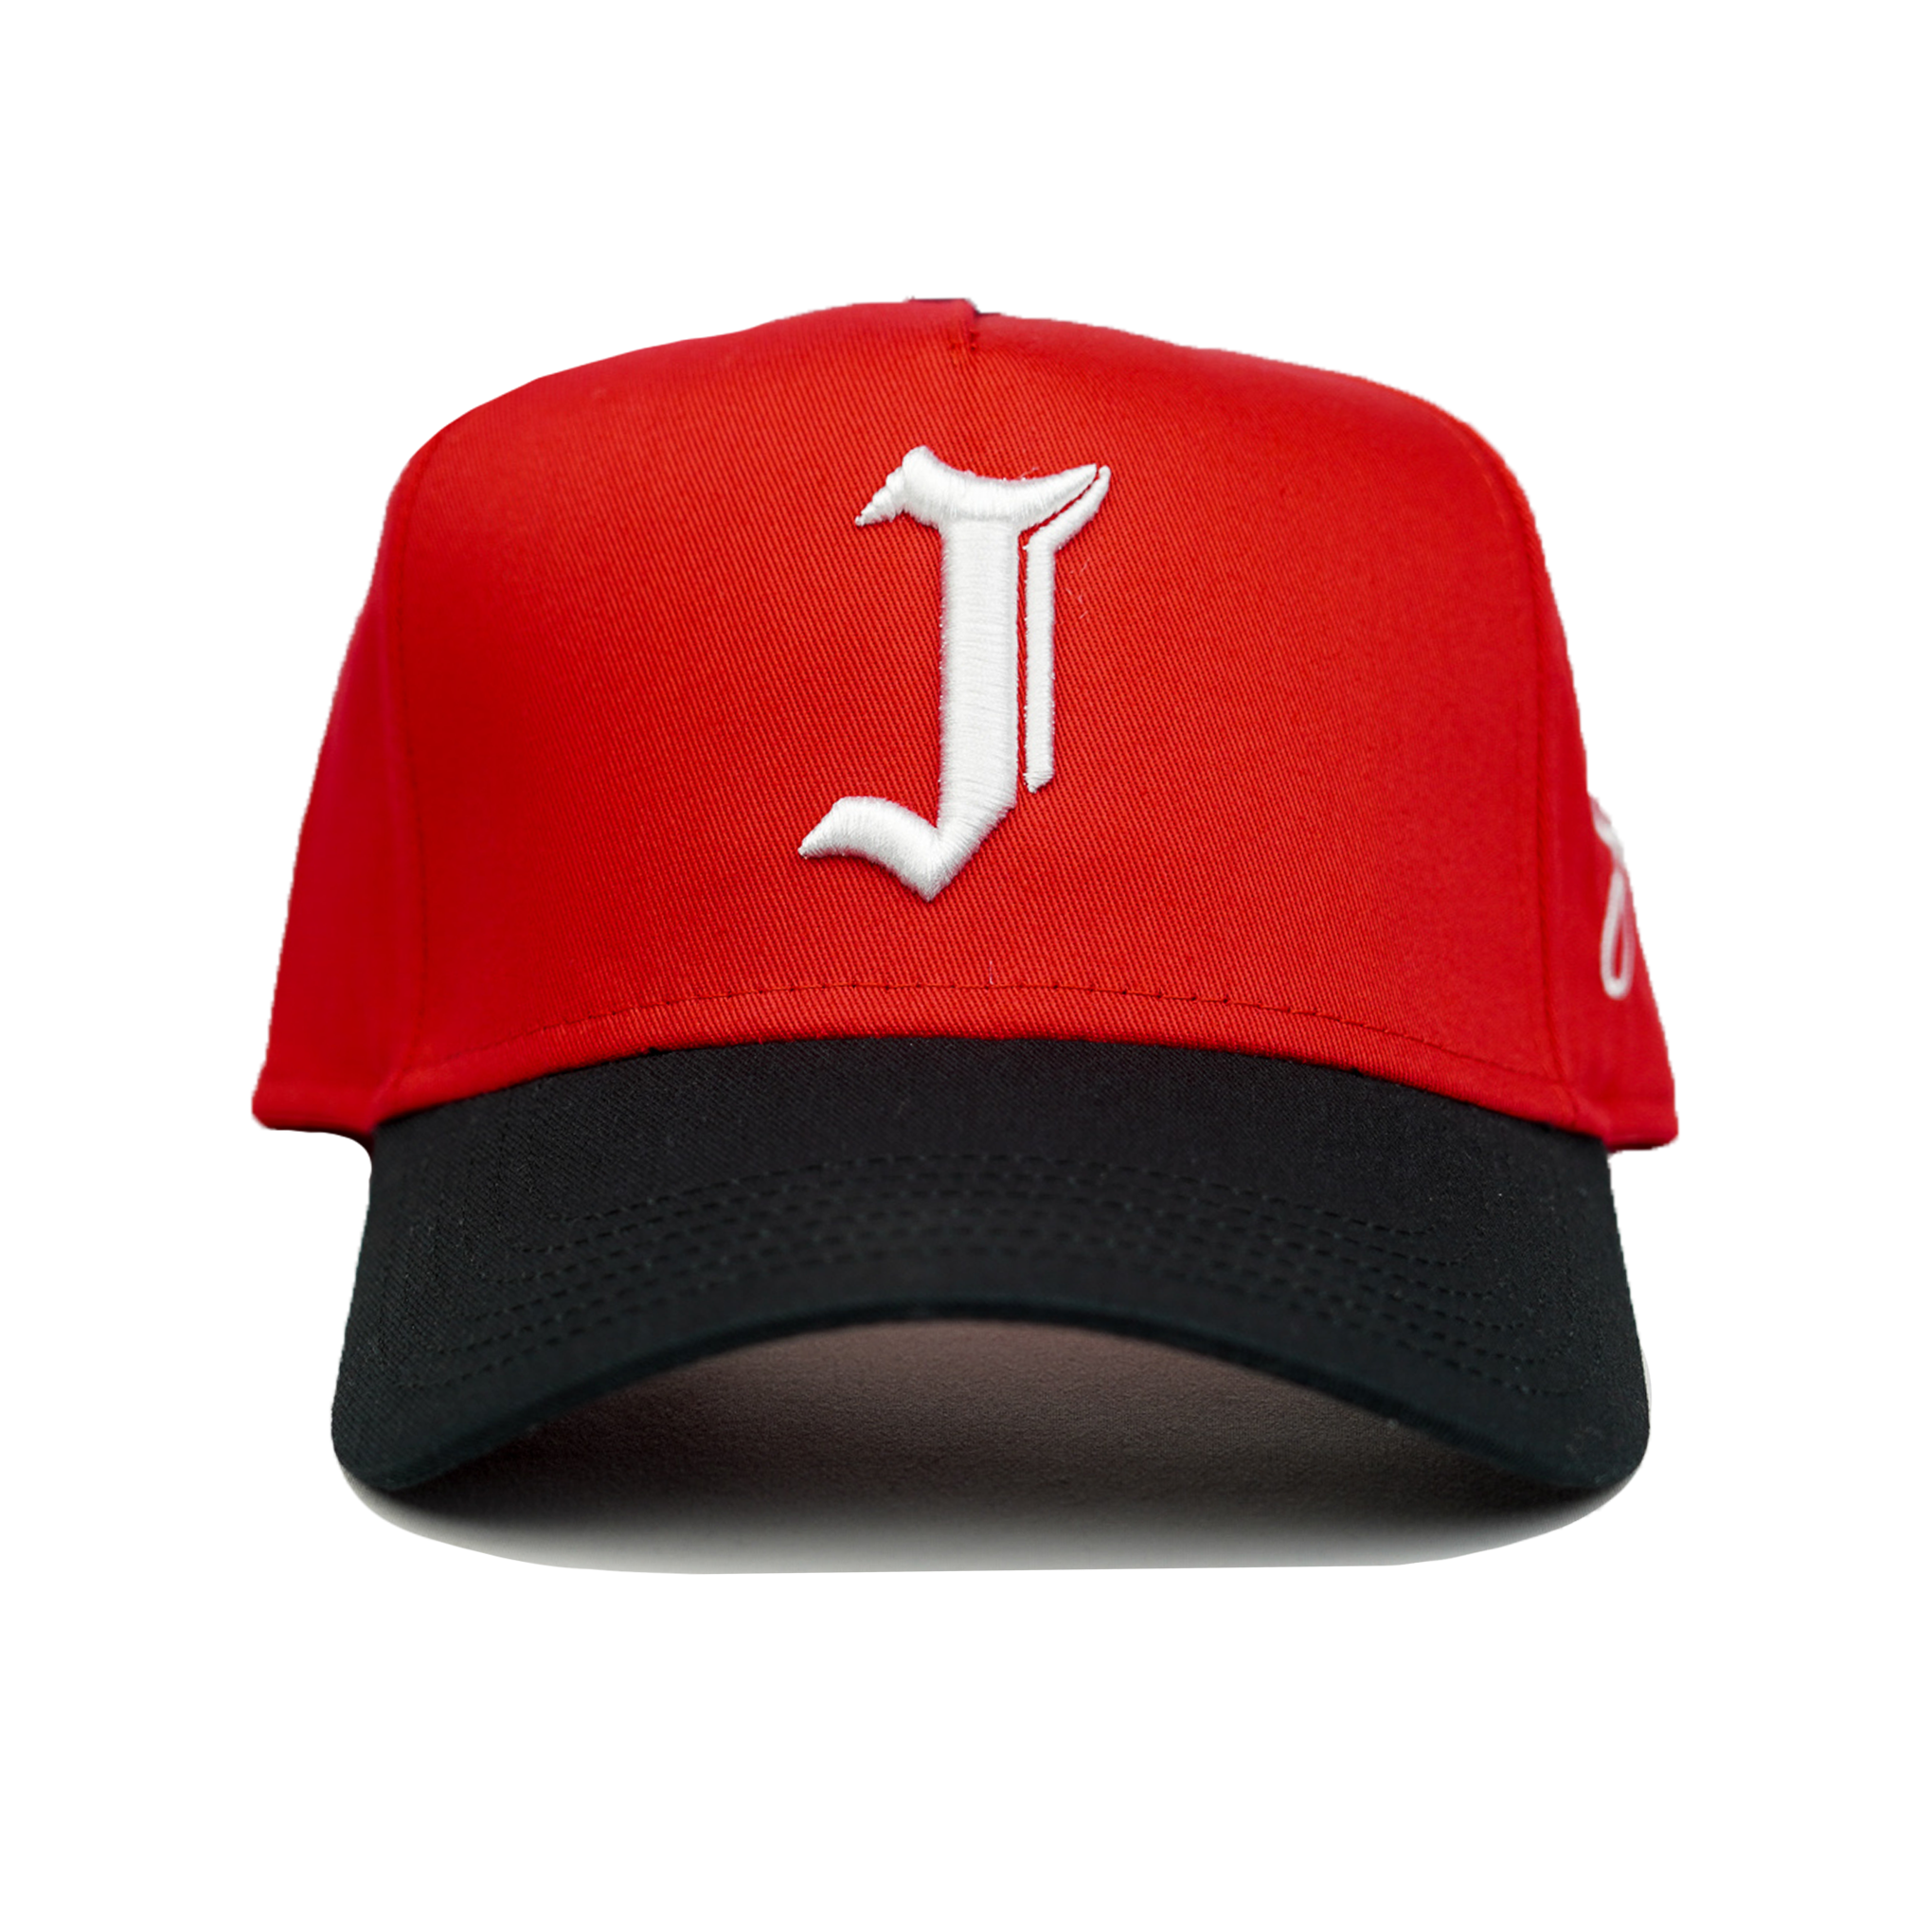 "J" Signature Snapback Hat (RED/BLACK)